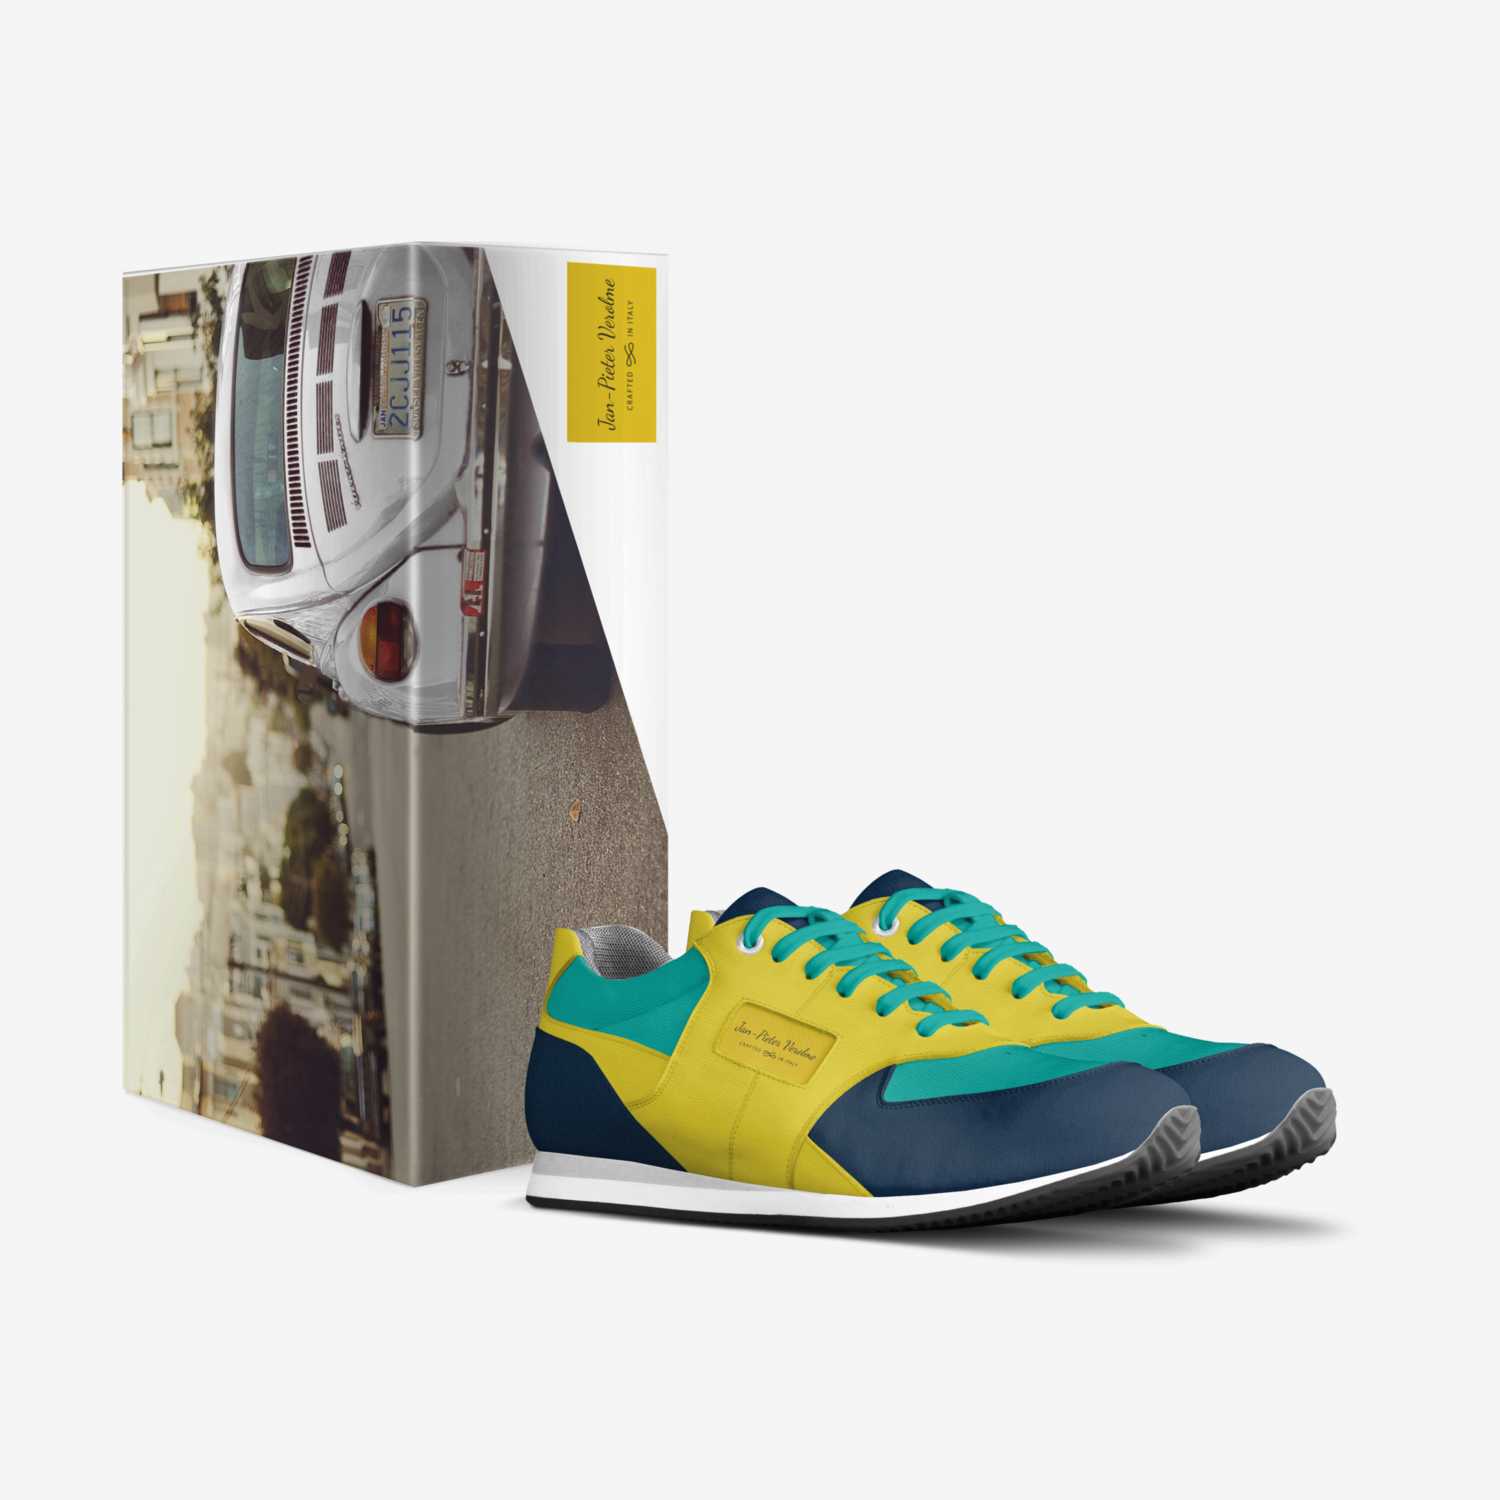 J-P sneaker2 custom made in Italy shoes by Jan-pieter Verolme | Box view